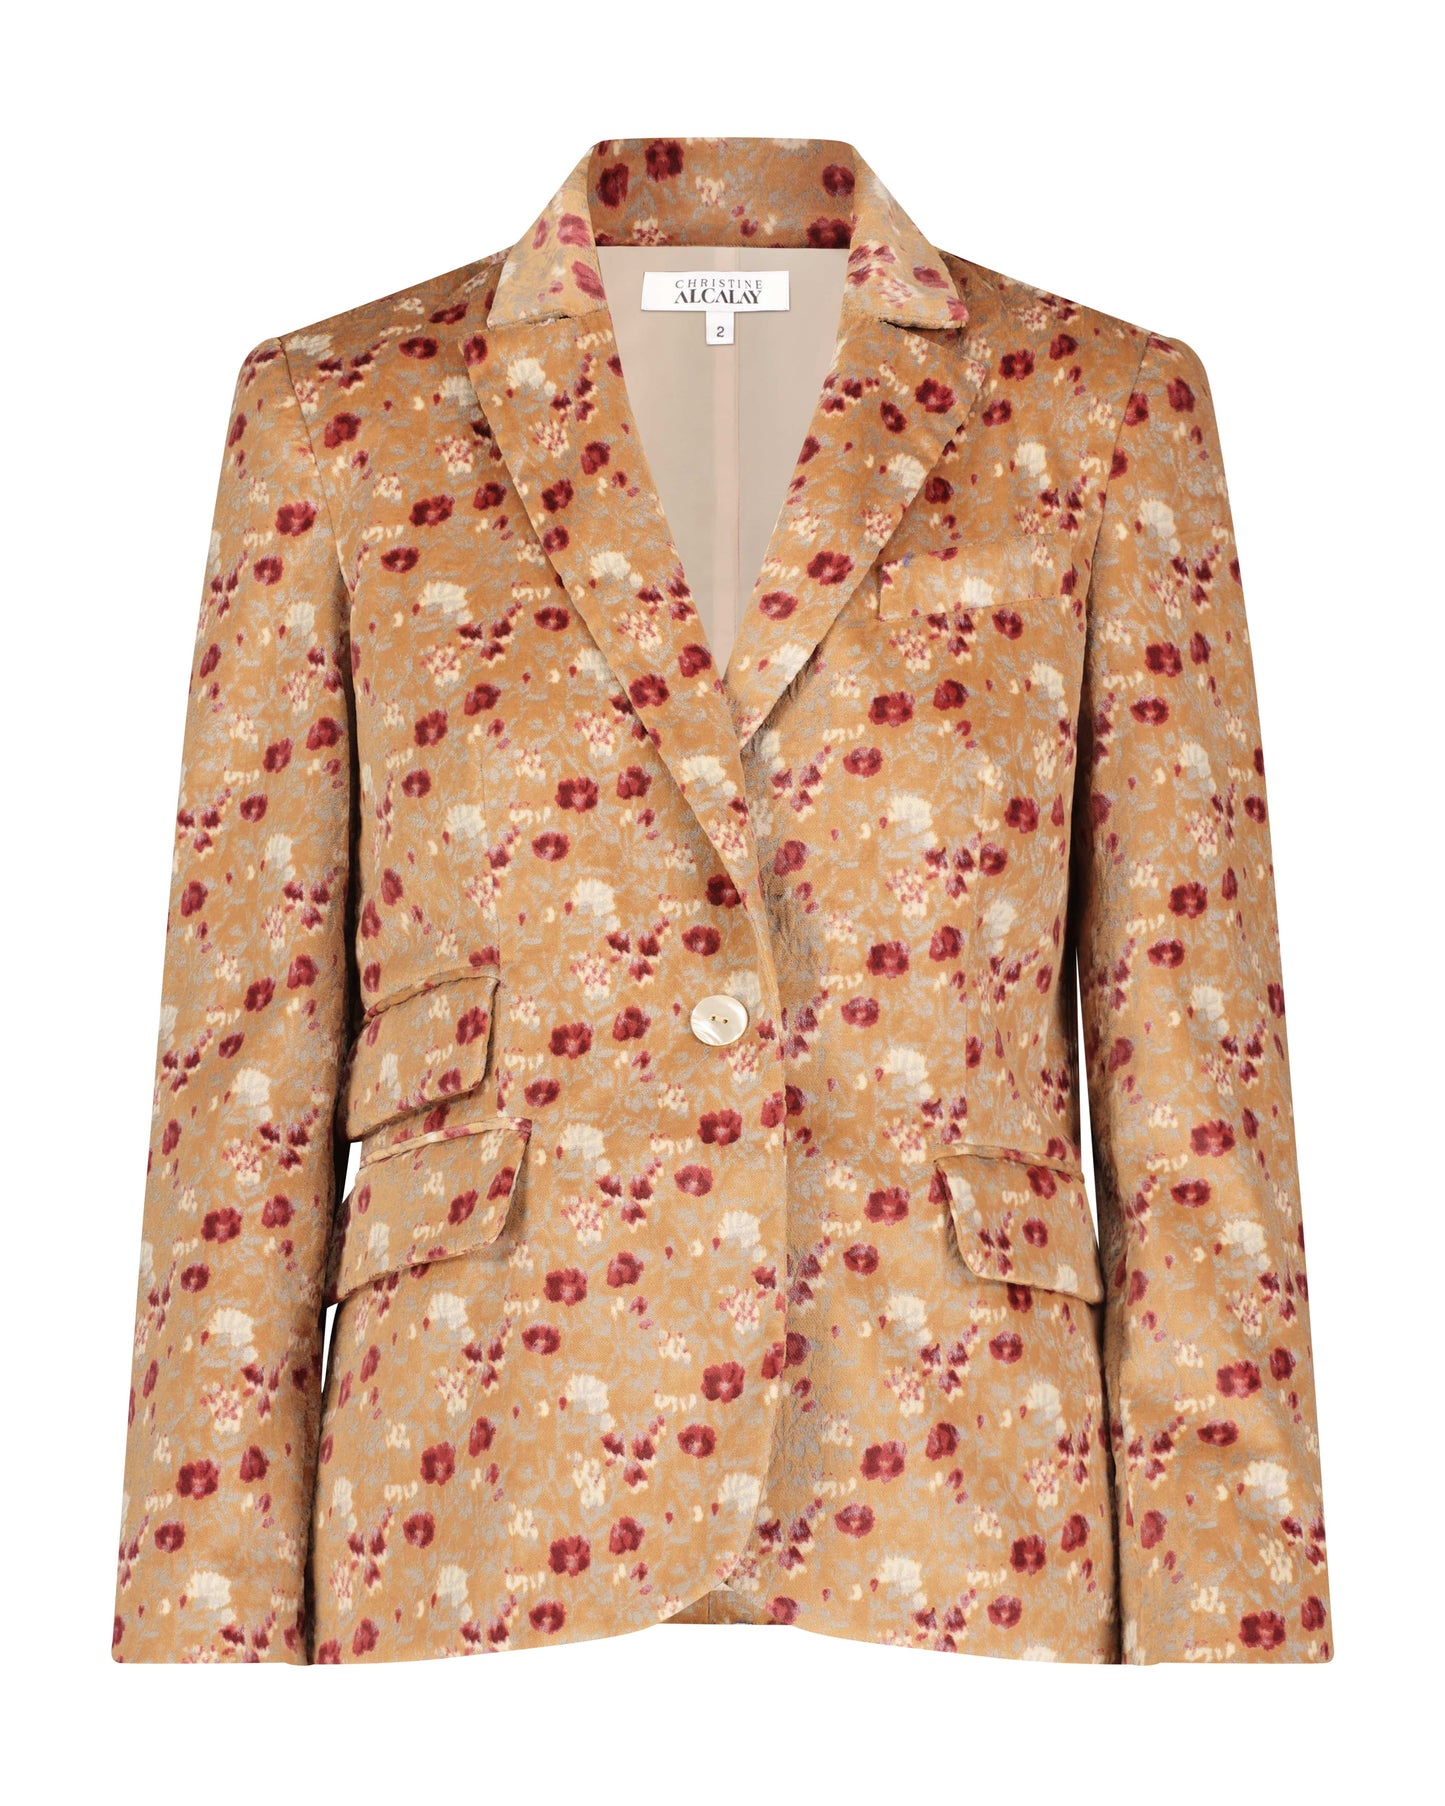 Tilda Jacket in Italian Floral Velvet Jackets CHRISTINE ALCALAY   